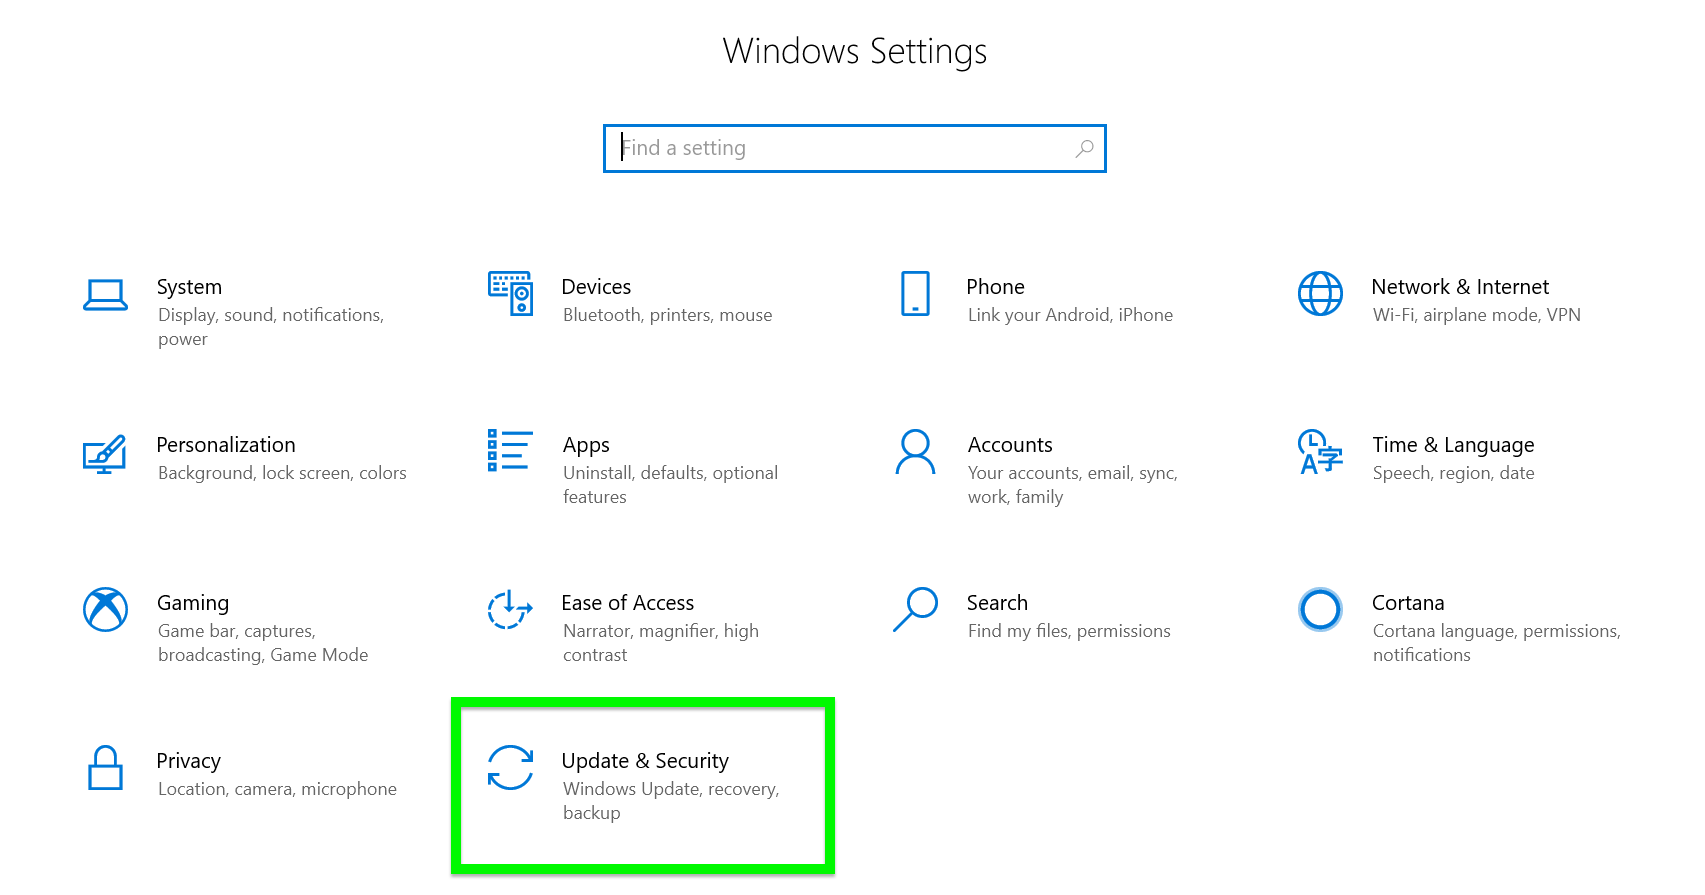 Windows 10 new start menu how to - Click Update & Security